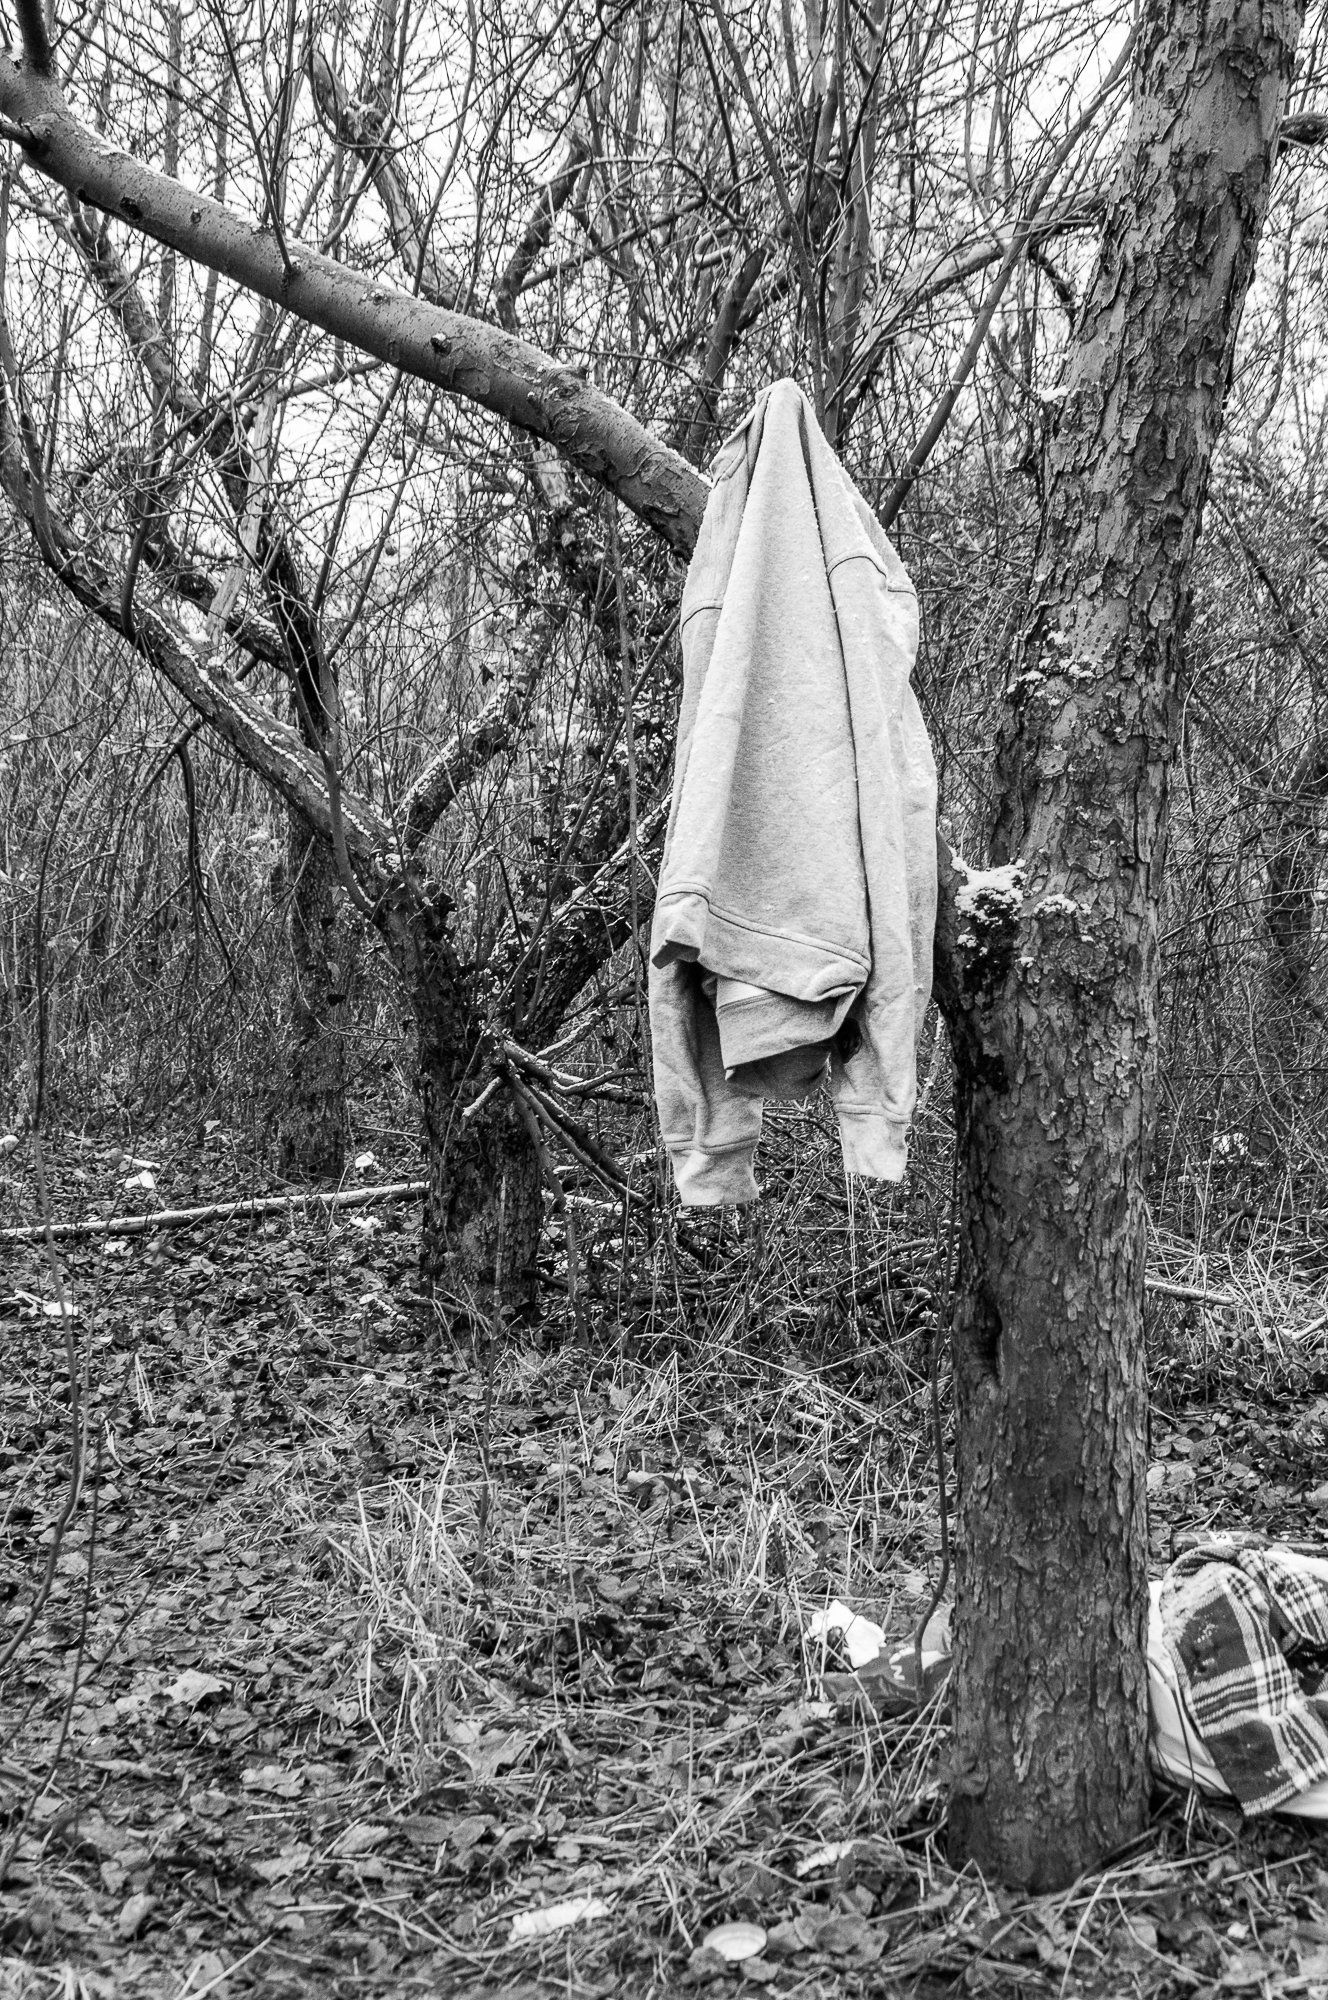 Adam Mazek Photography Warsaw (Warszawa) 2018. Post: "Outfit for street photography." Minimalism. Hanging hoodie on the tree.